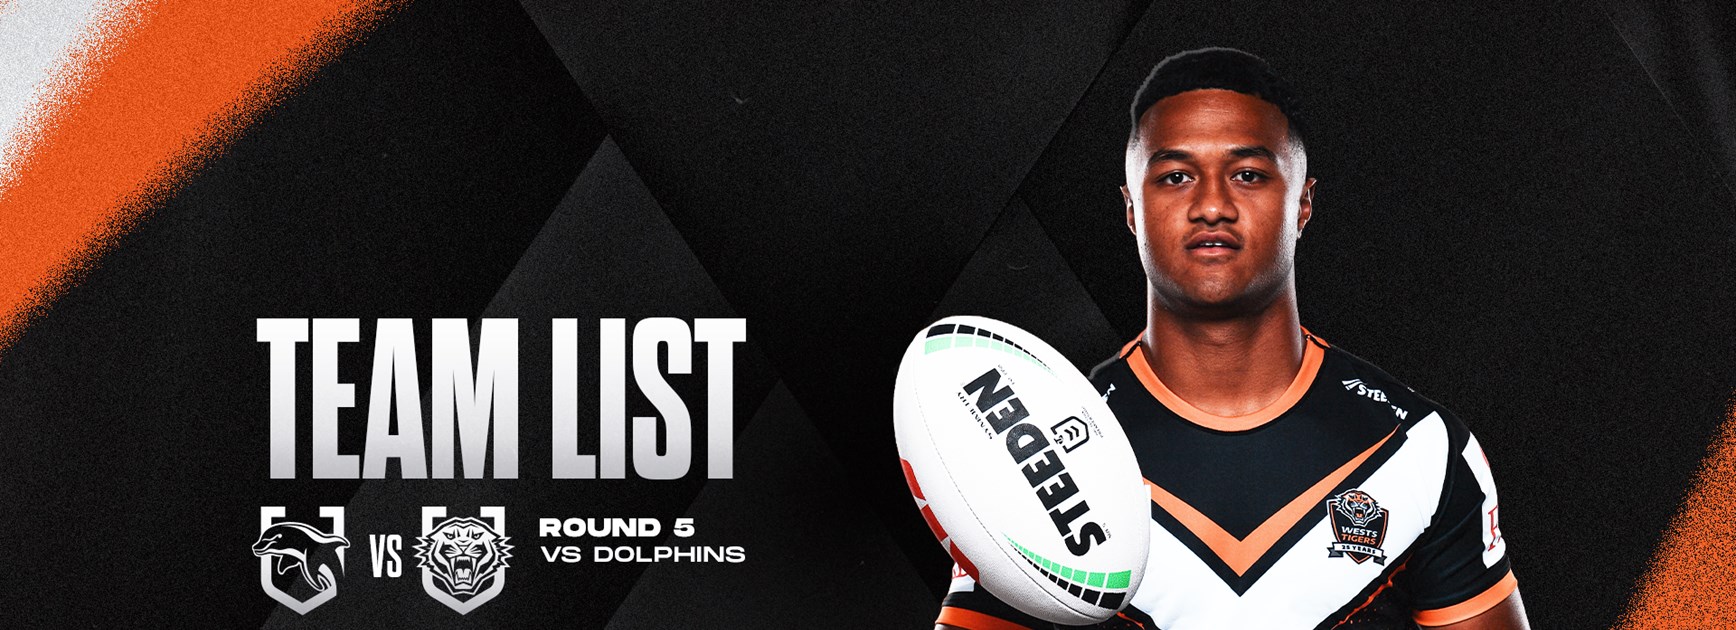 Team List: NRL Round 5 vs Dolphins